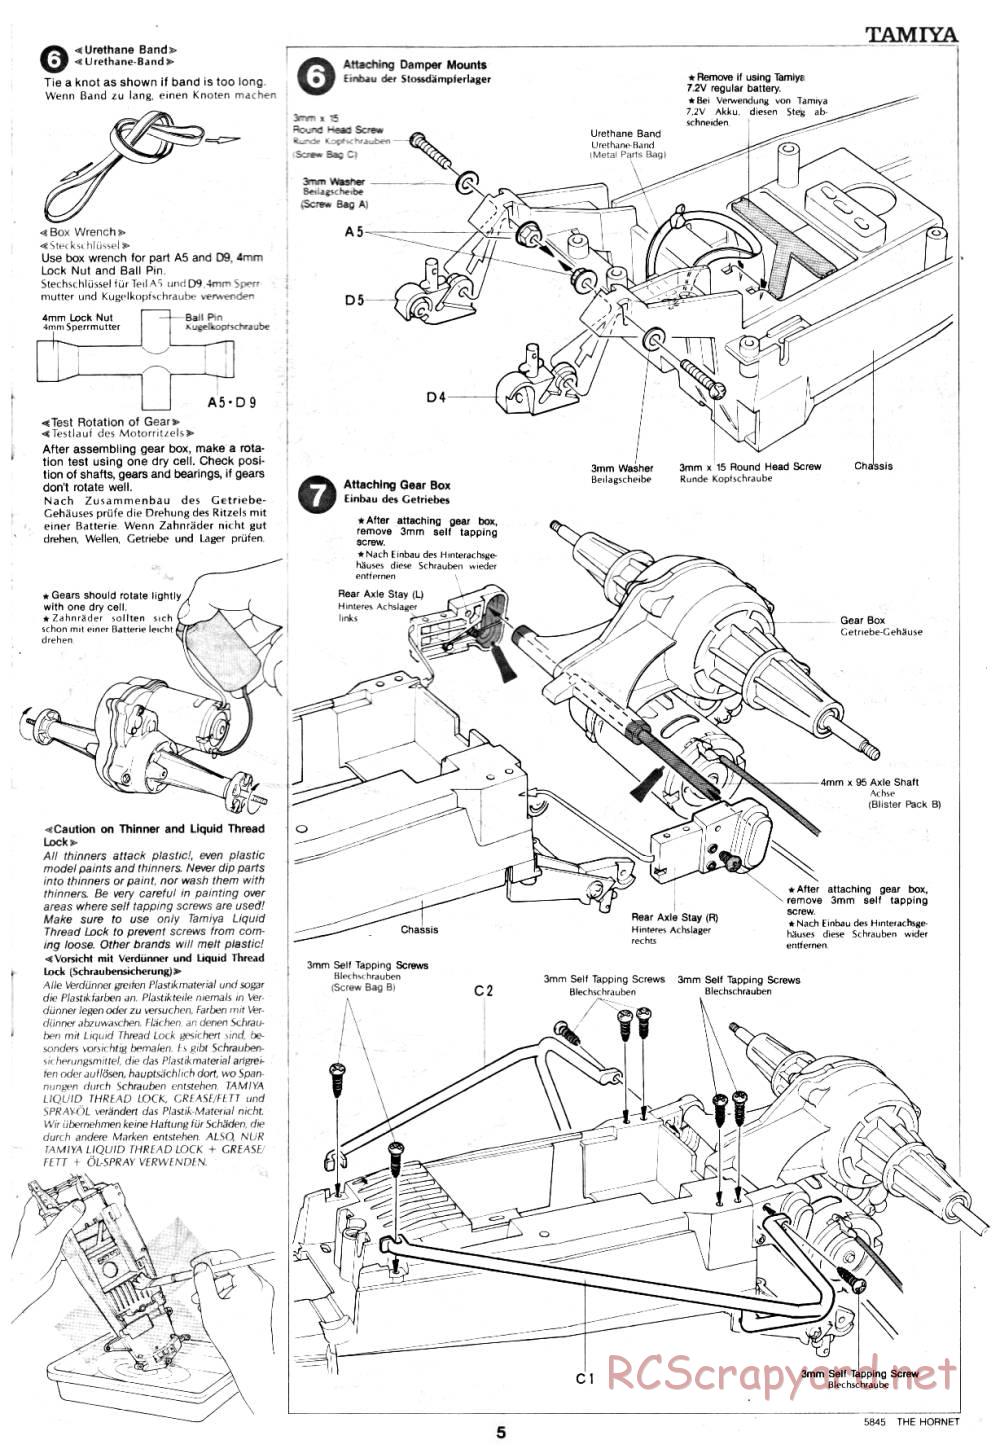 Tamiya - The Hornet - 58045 - Manual - Page 5